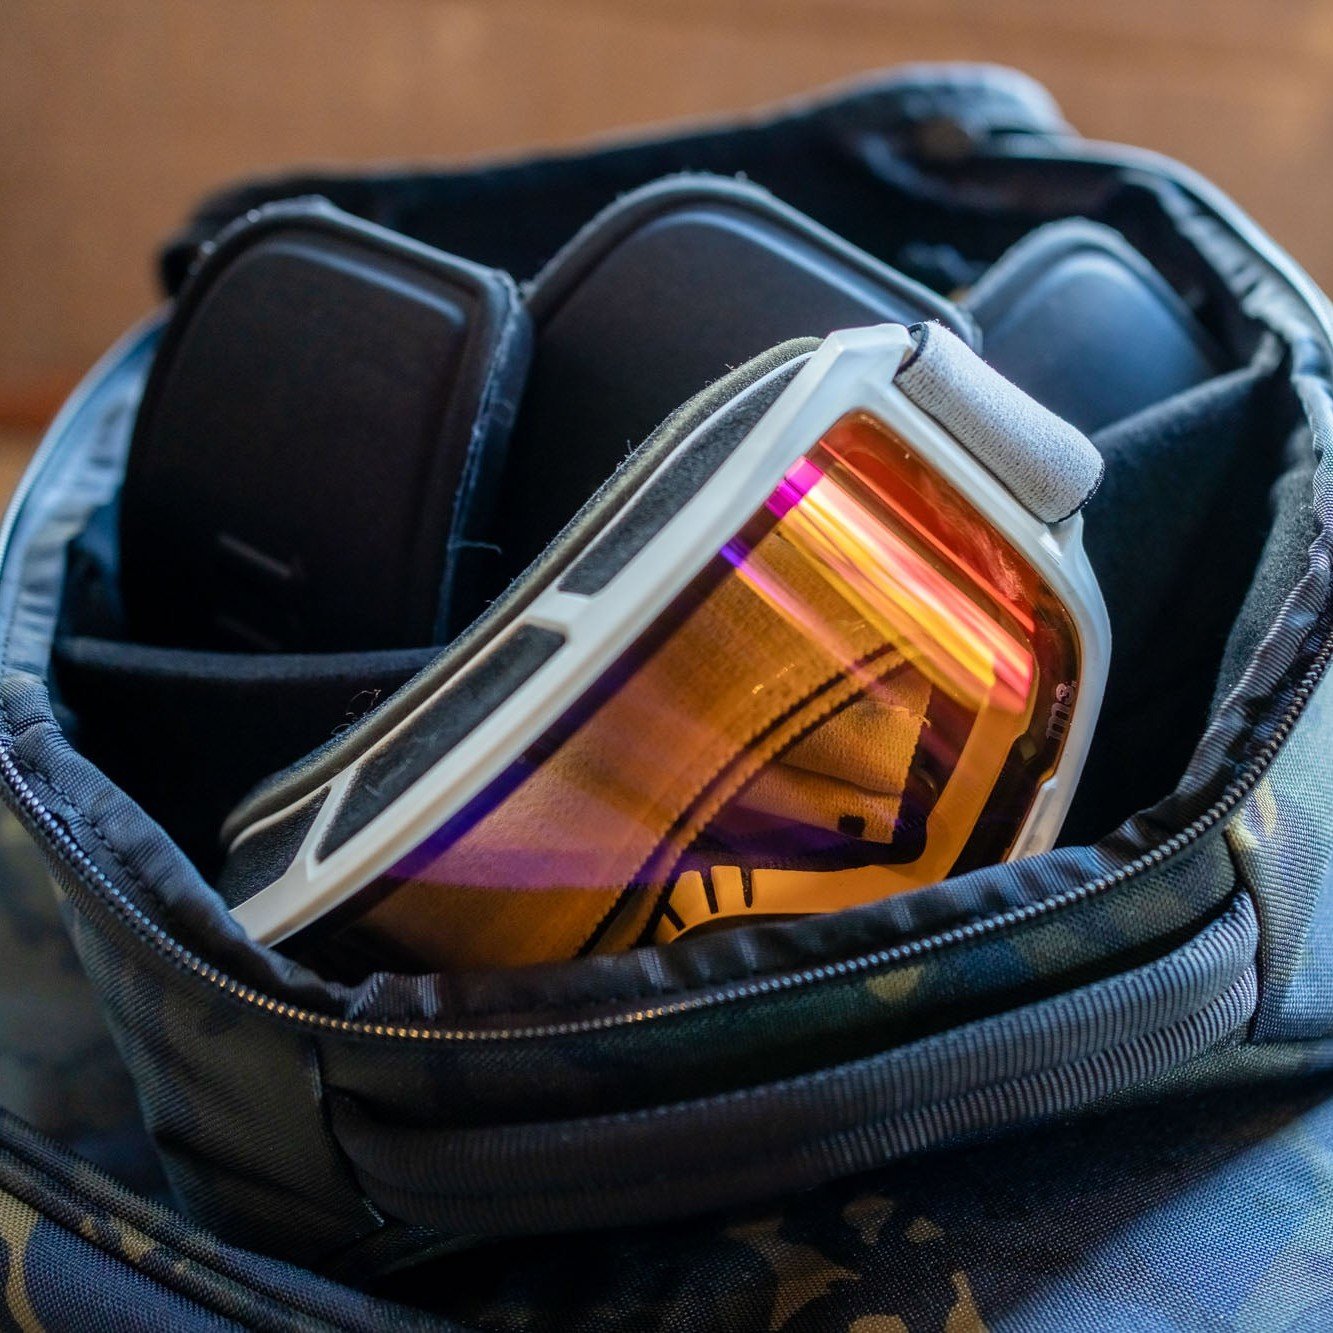 Dakine Goggle Case Gear Bag